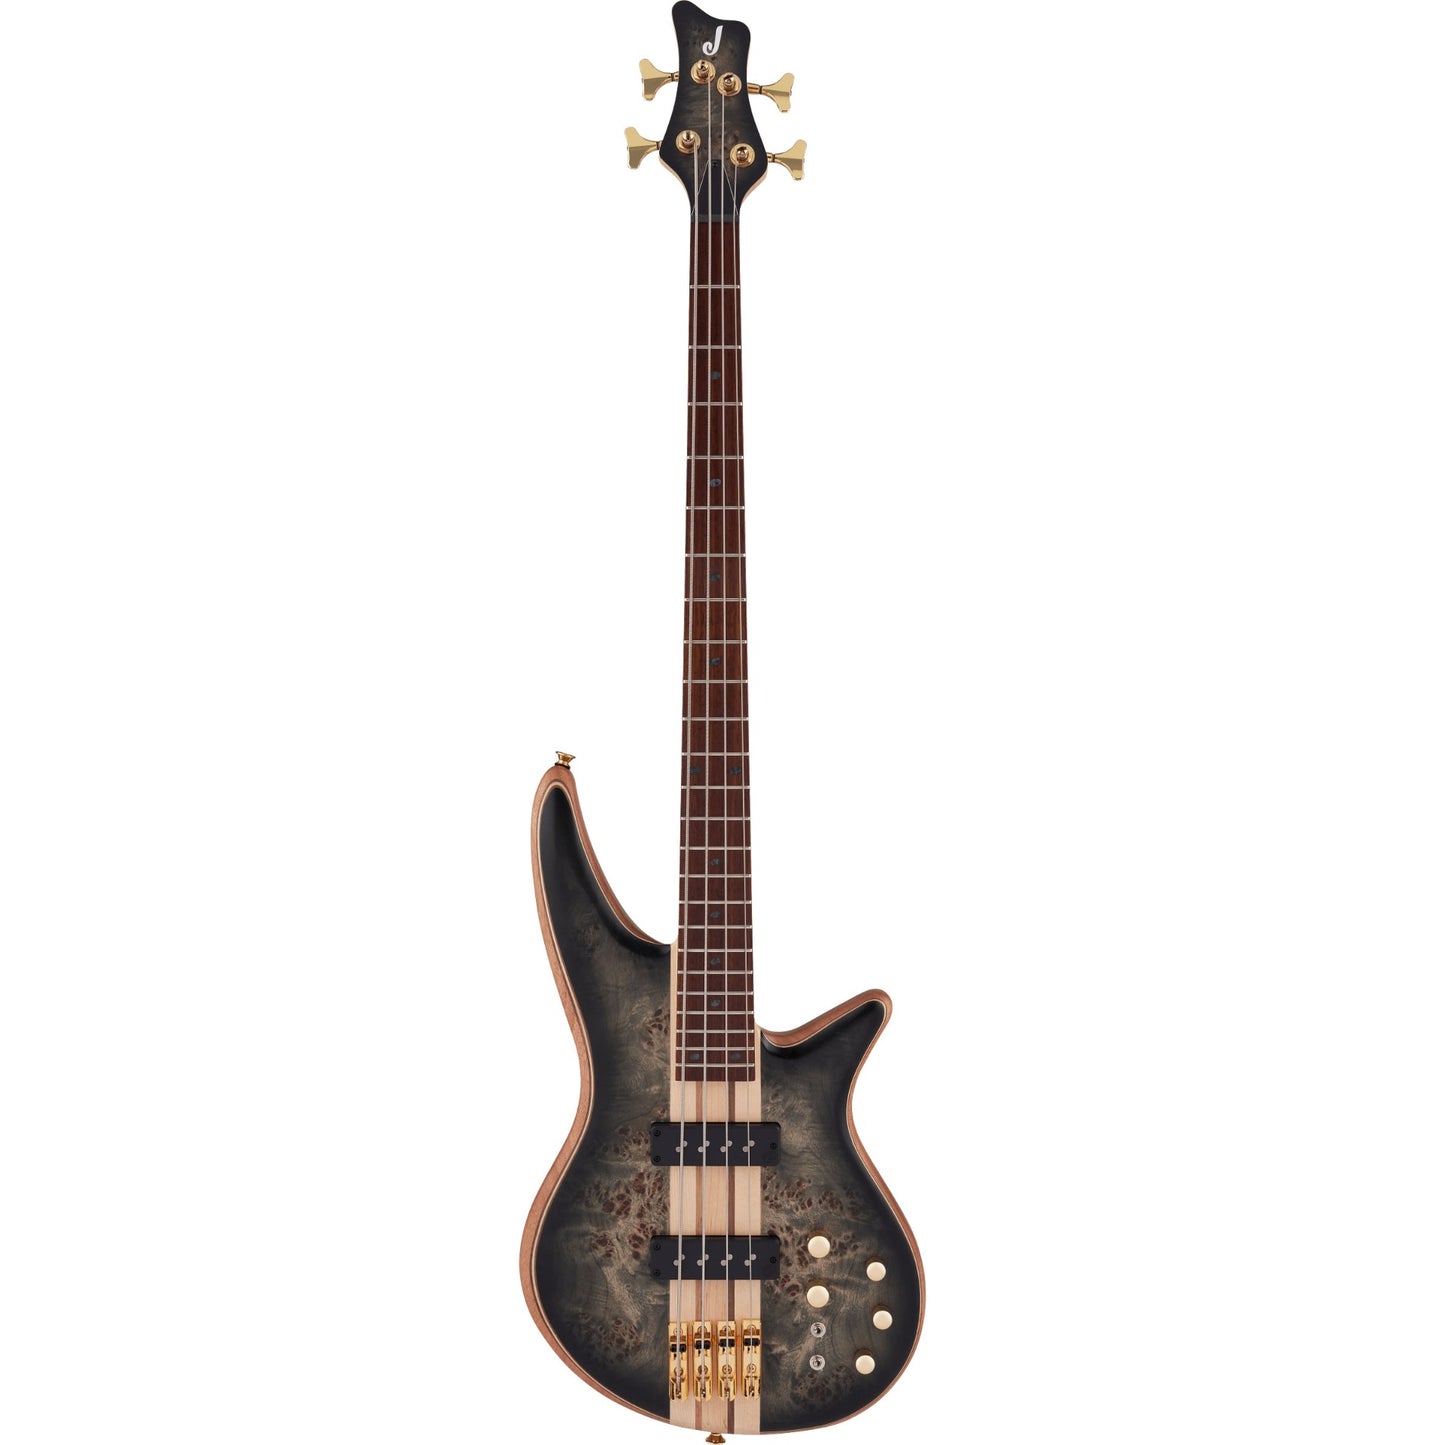 Jackson Pro Series Spectra Bass SBP IV Bass Guitar, Transparent Black Burst